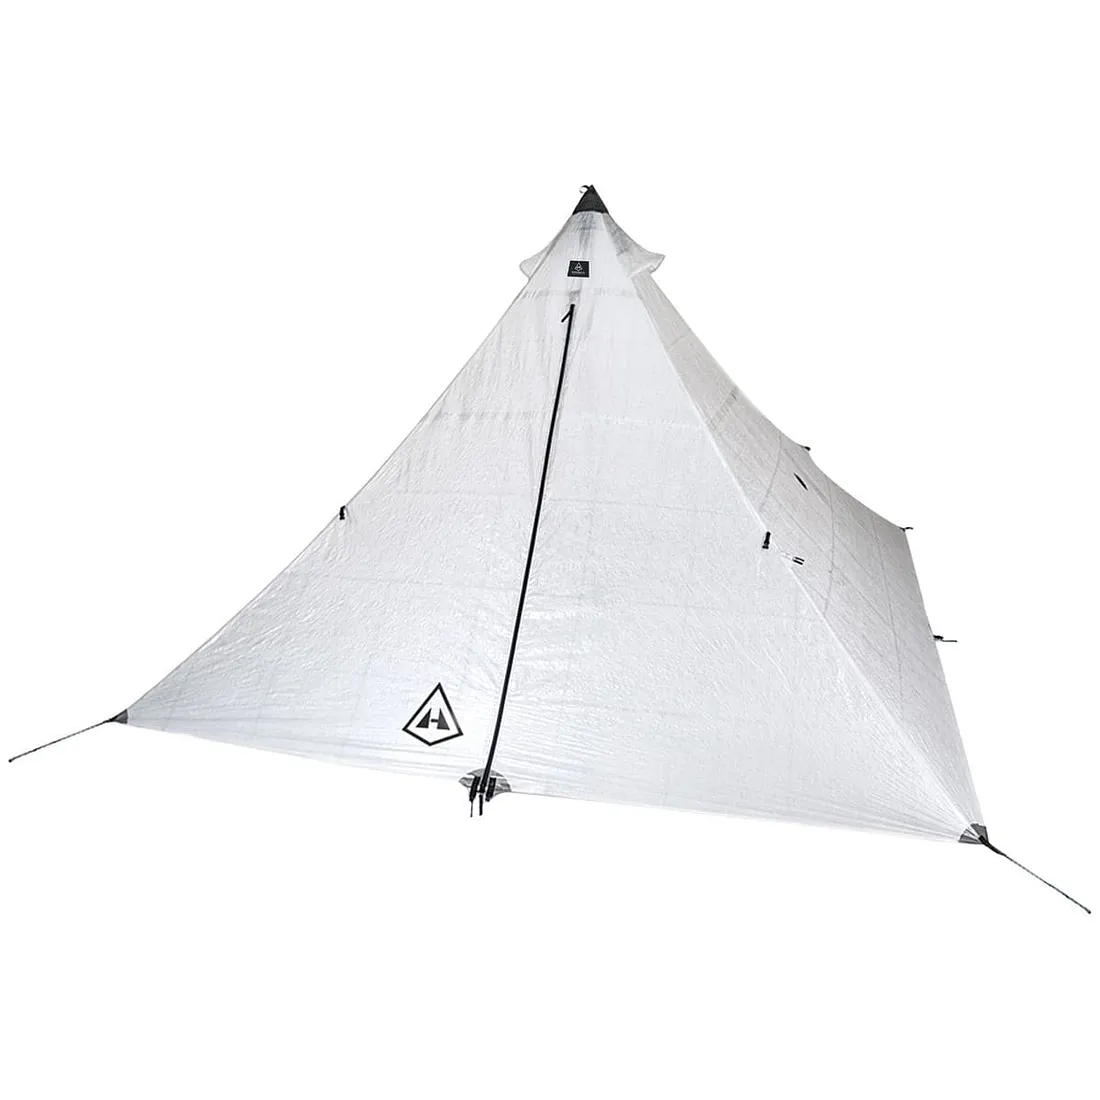 Hyperlite Mountain Gear Ultamid 2 4-Season Tent